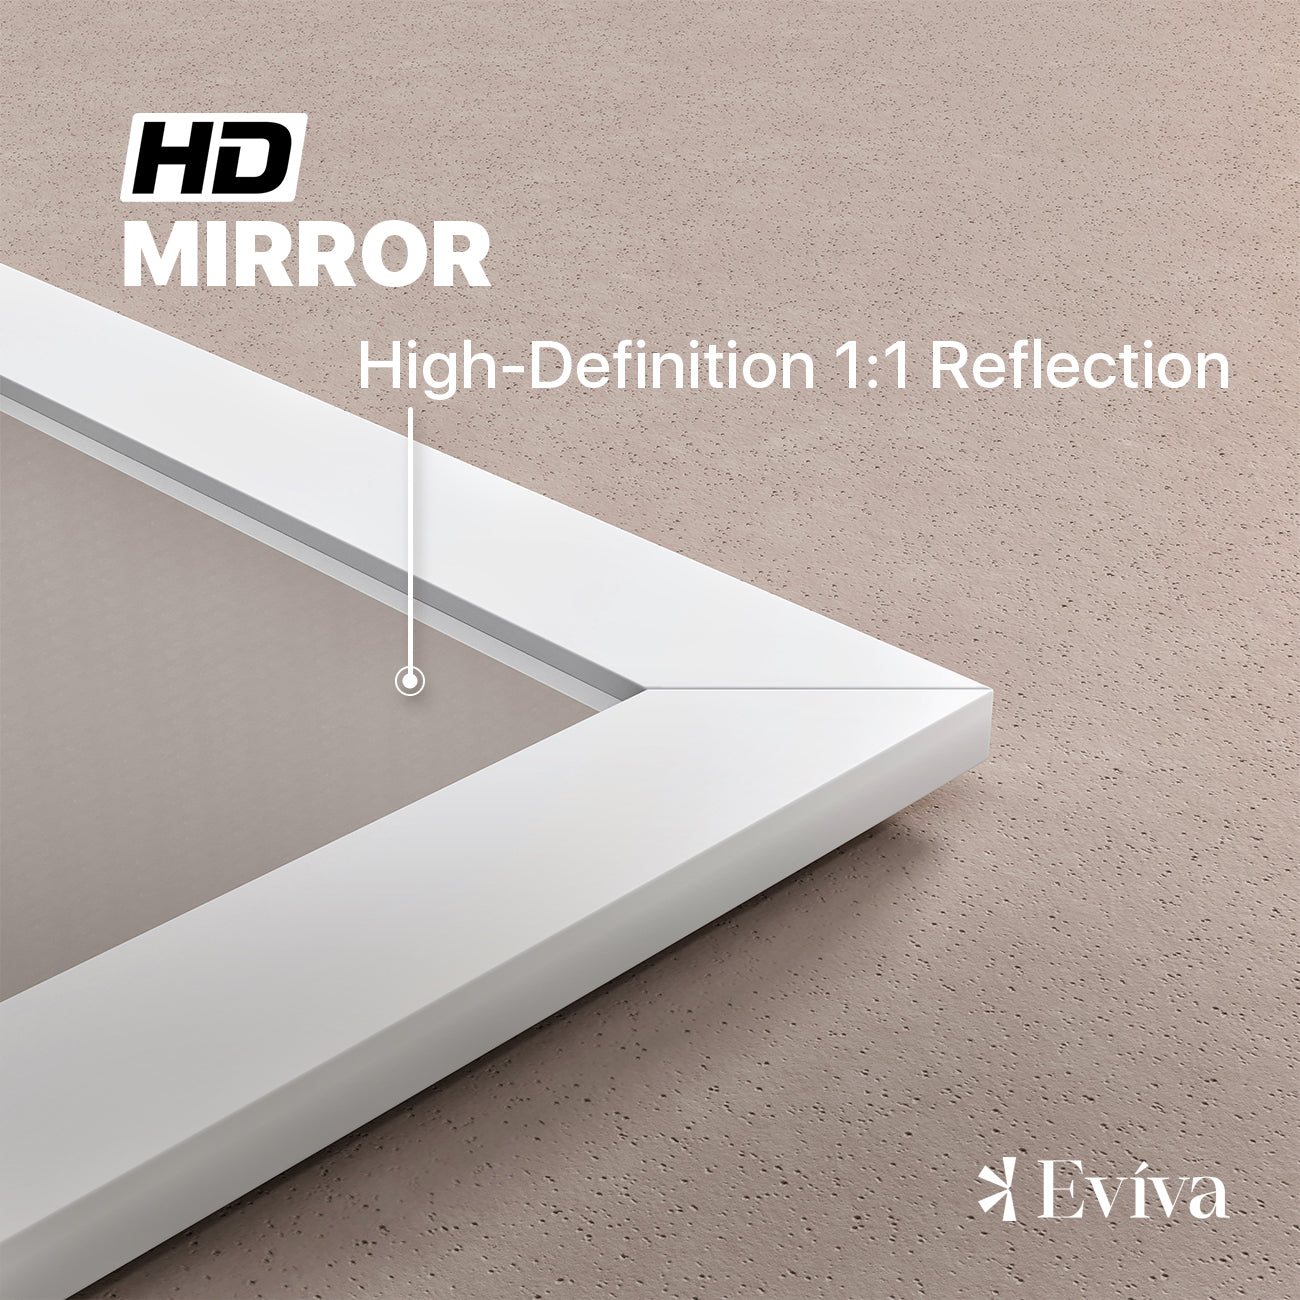 Eviva Acclaim Transitional White Bathroom Vanity Mirror